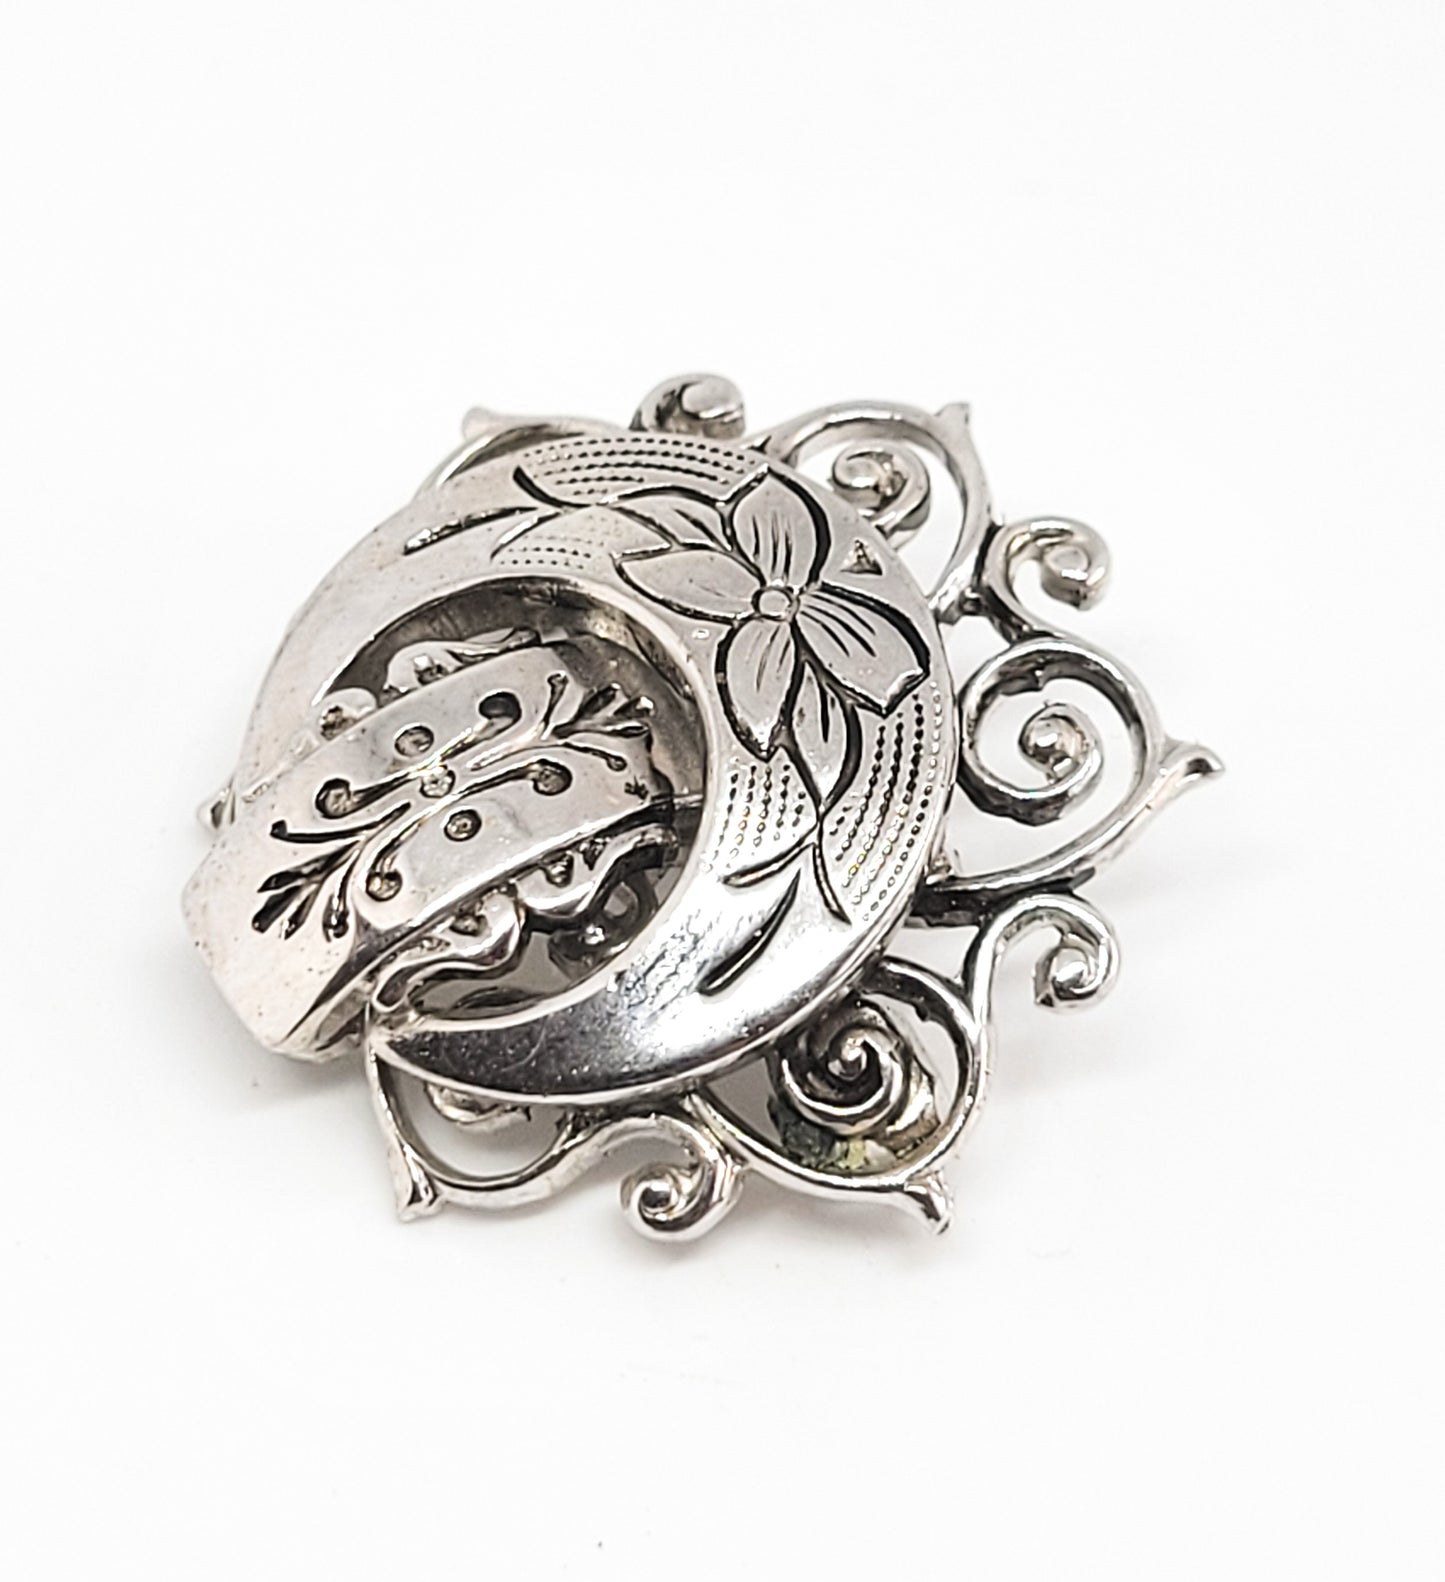 Crescent moon celestial lotus flower silver toned vintage etched filigree brooch